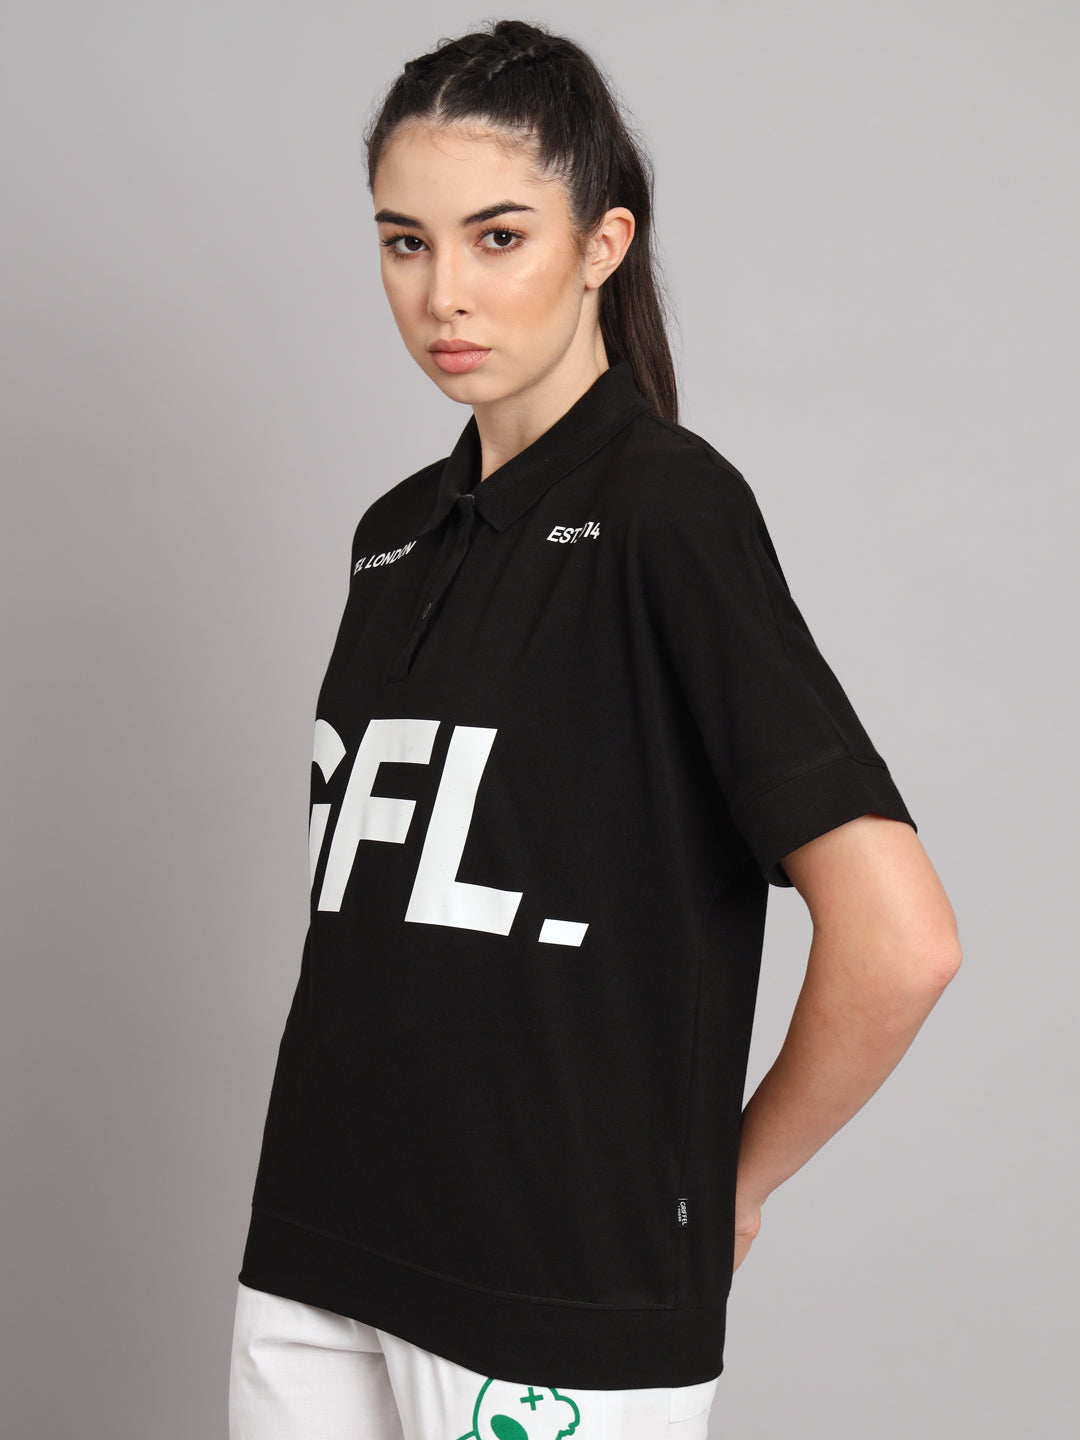 GRIFFEL Women Basic Solid Black Printed Polo T-shirt - griffel